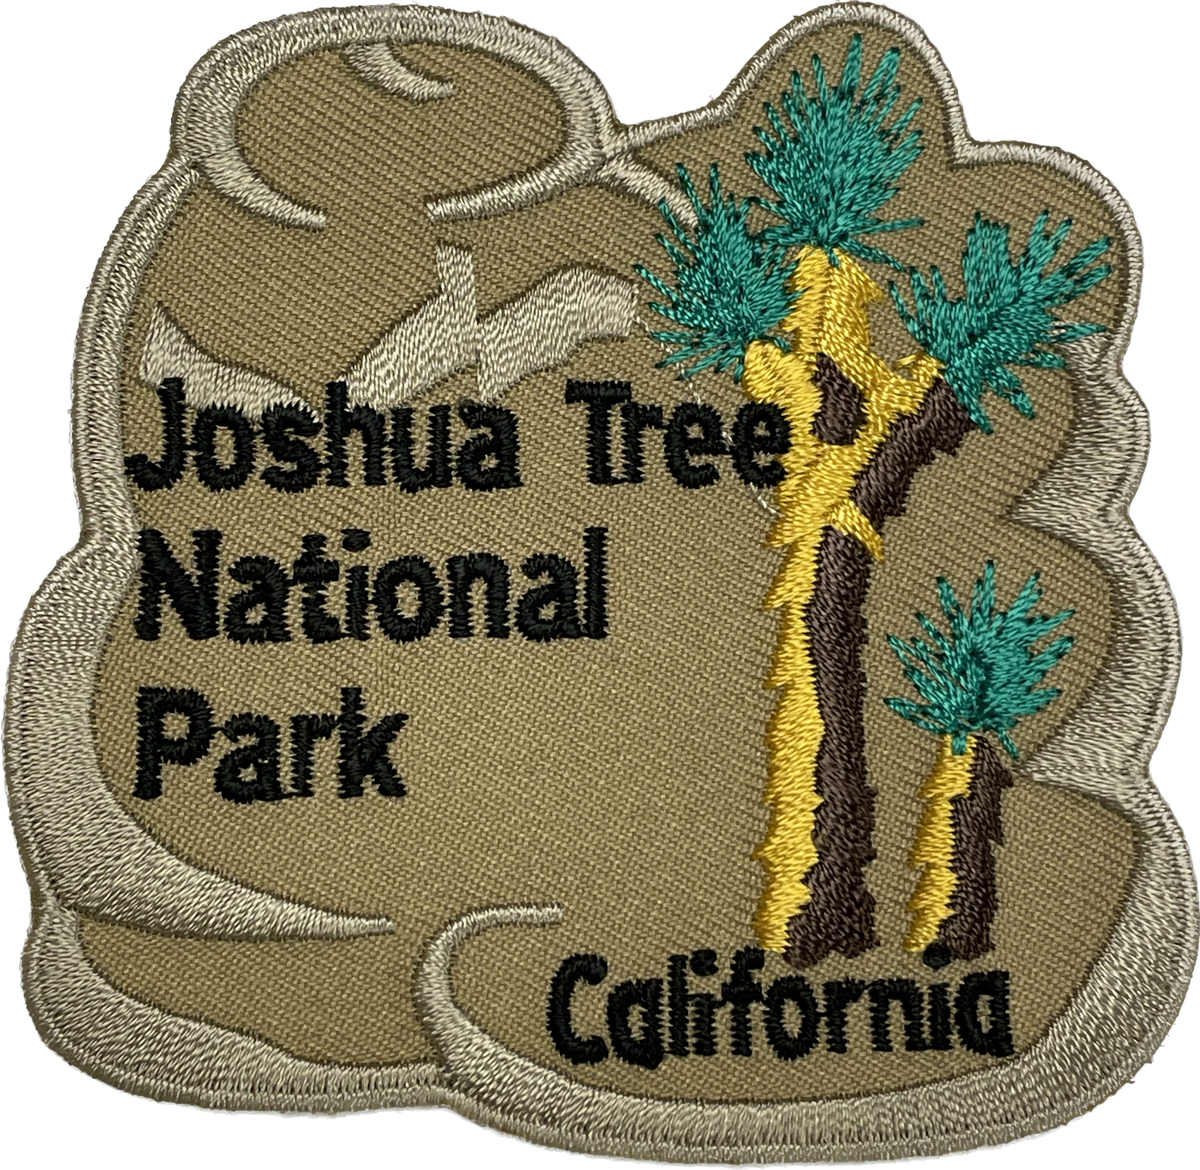 Joshua Tree National Park Patches – Joshua Tree National Park Association